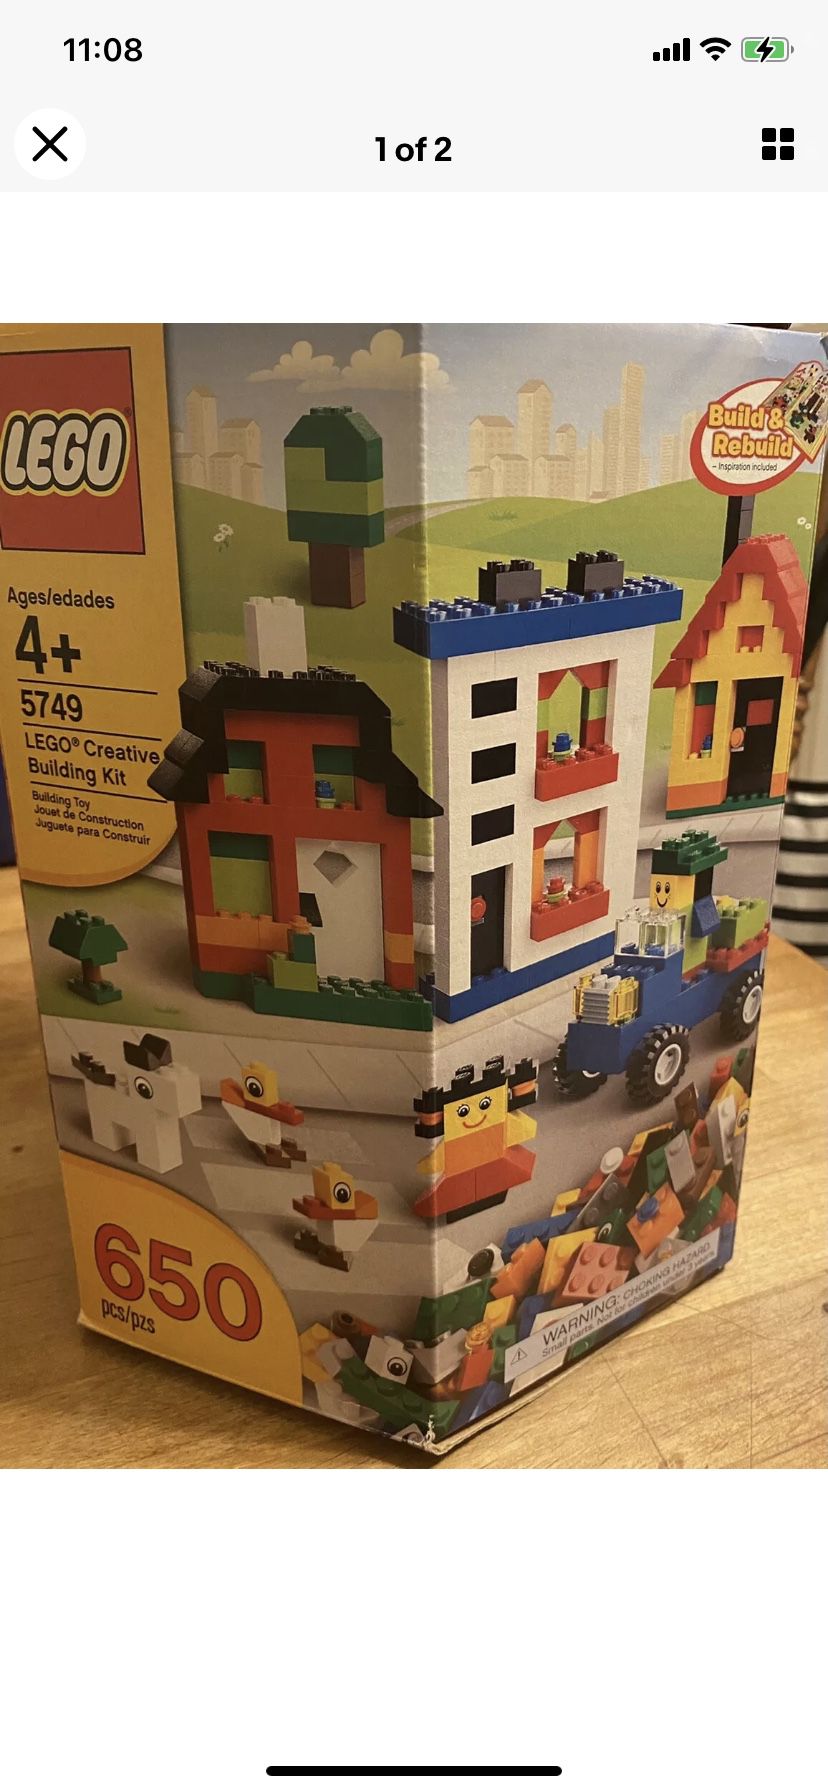 Creative Lego Building Kit